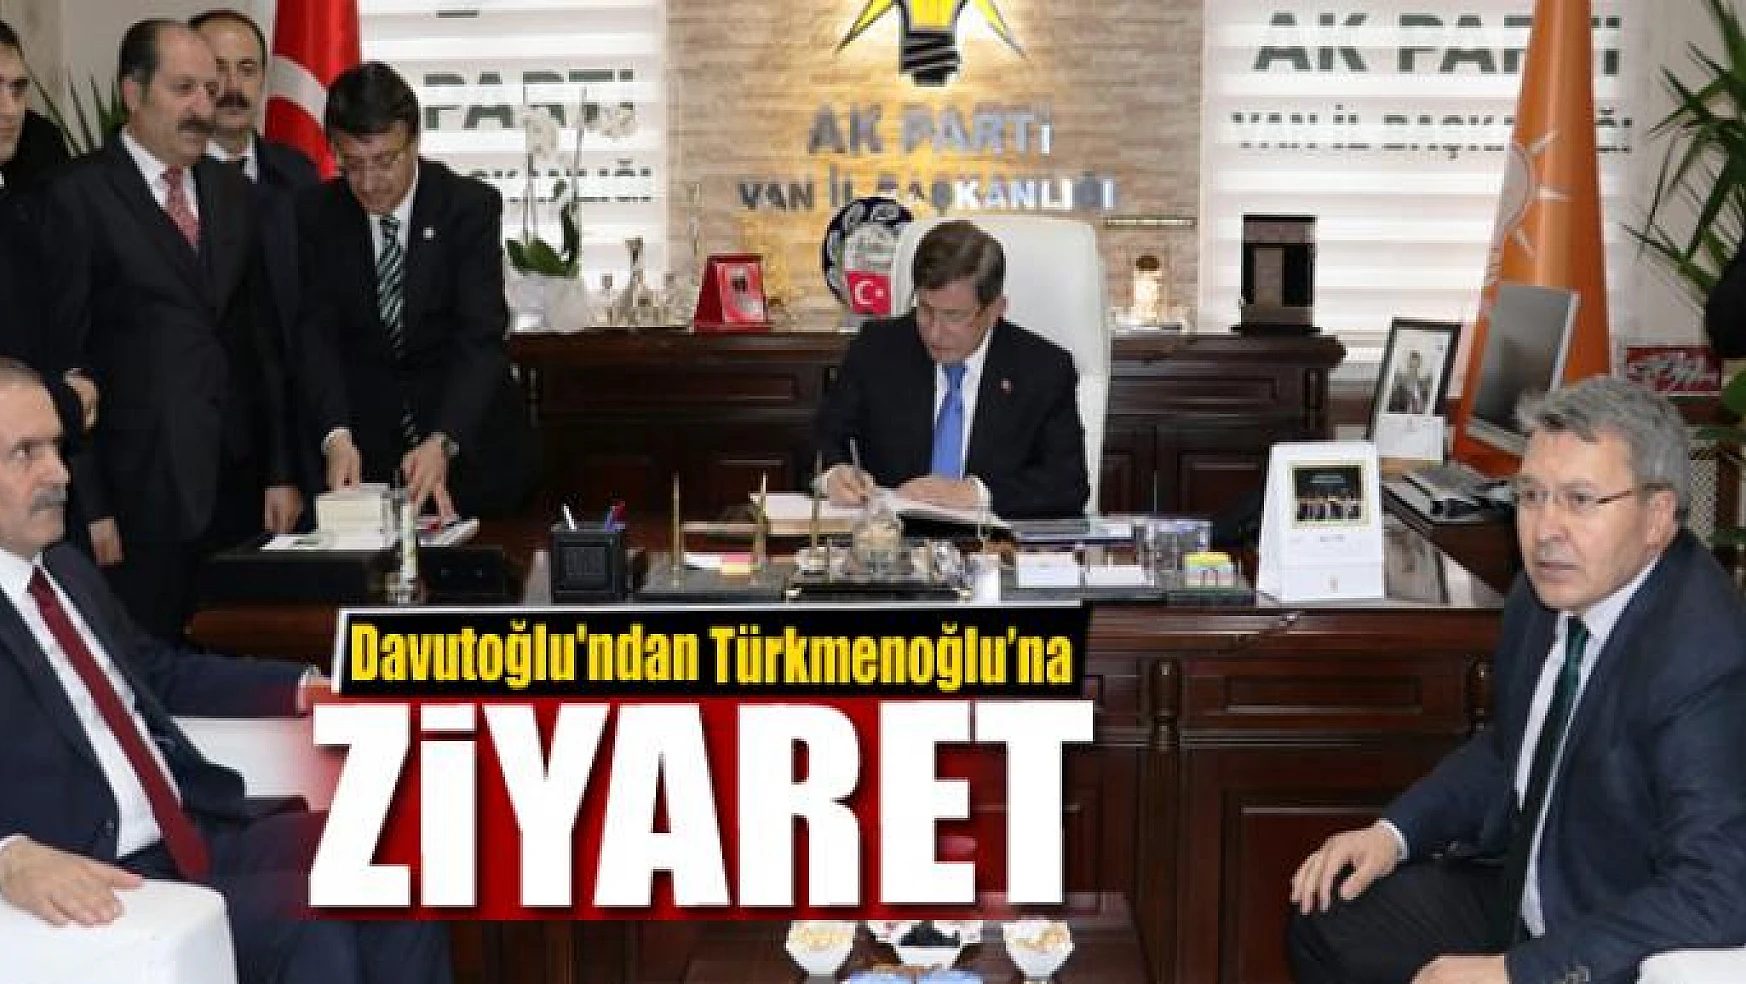 Davutoğlu'ndan AK Parti Van İl Başkanlığına ziyaret 